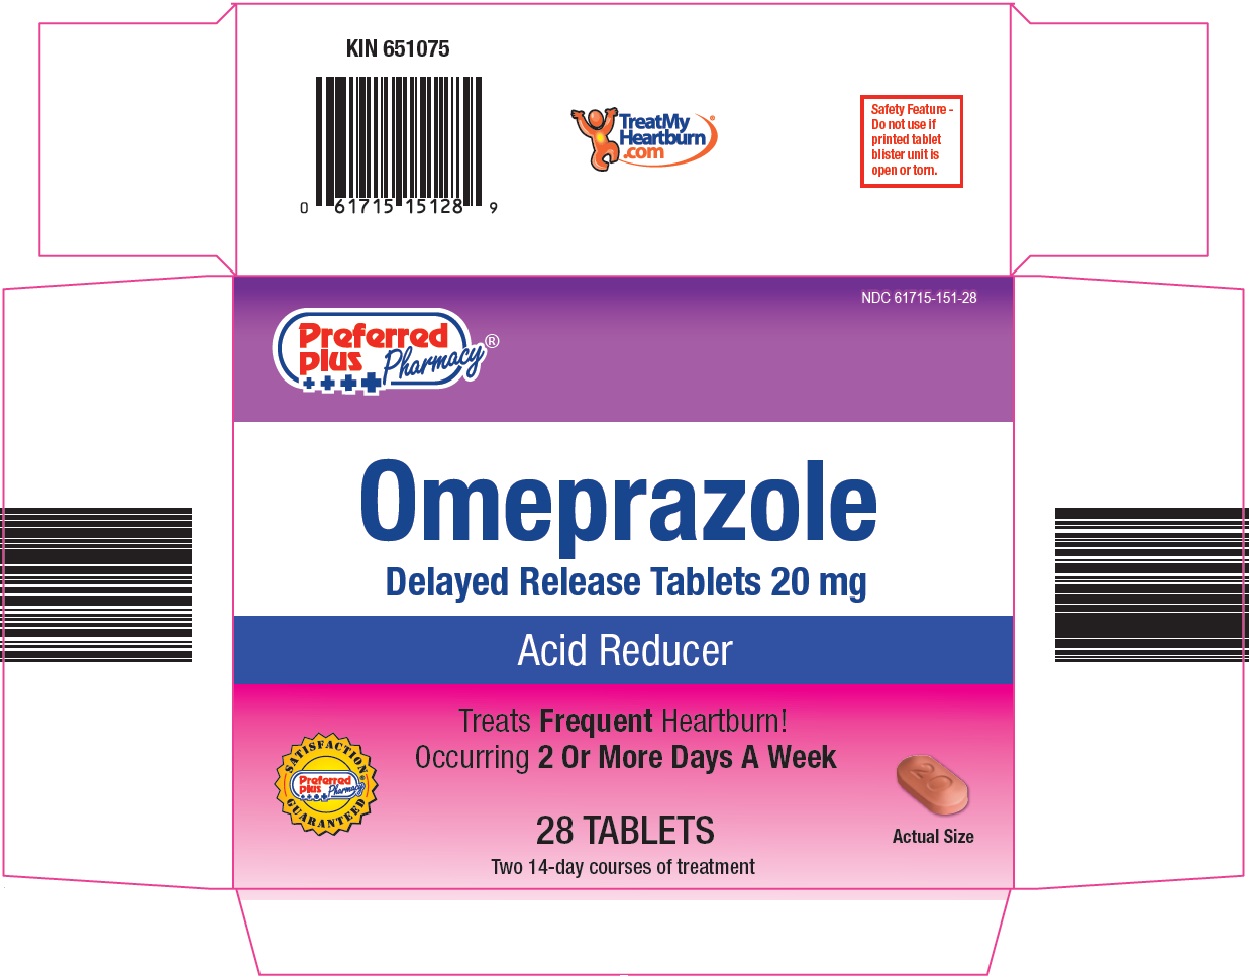 Preferred Plus Pharmacy Omeprazole image 1